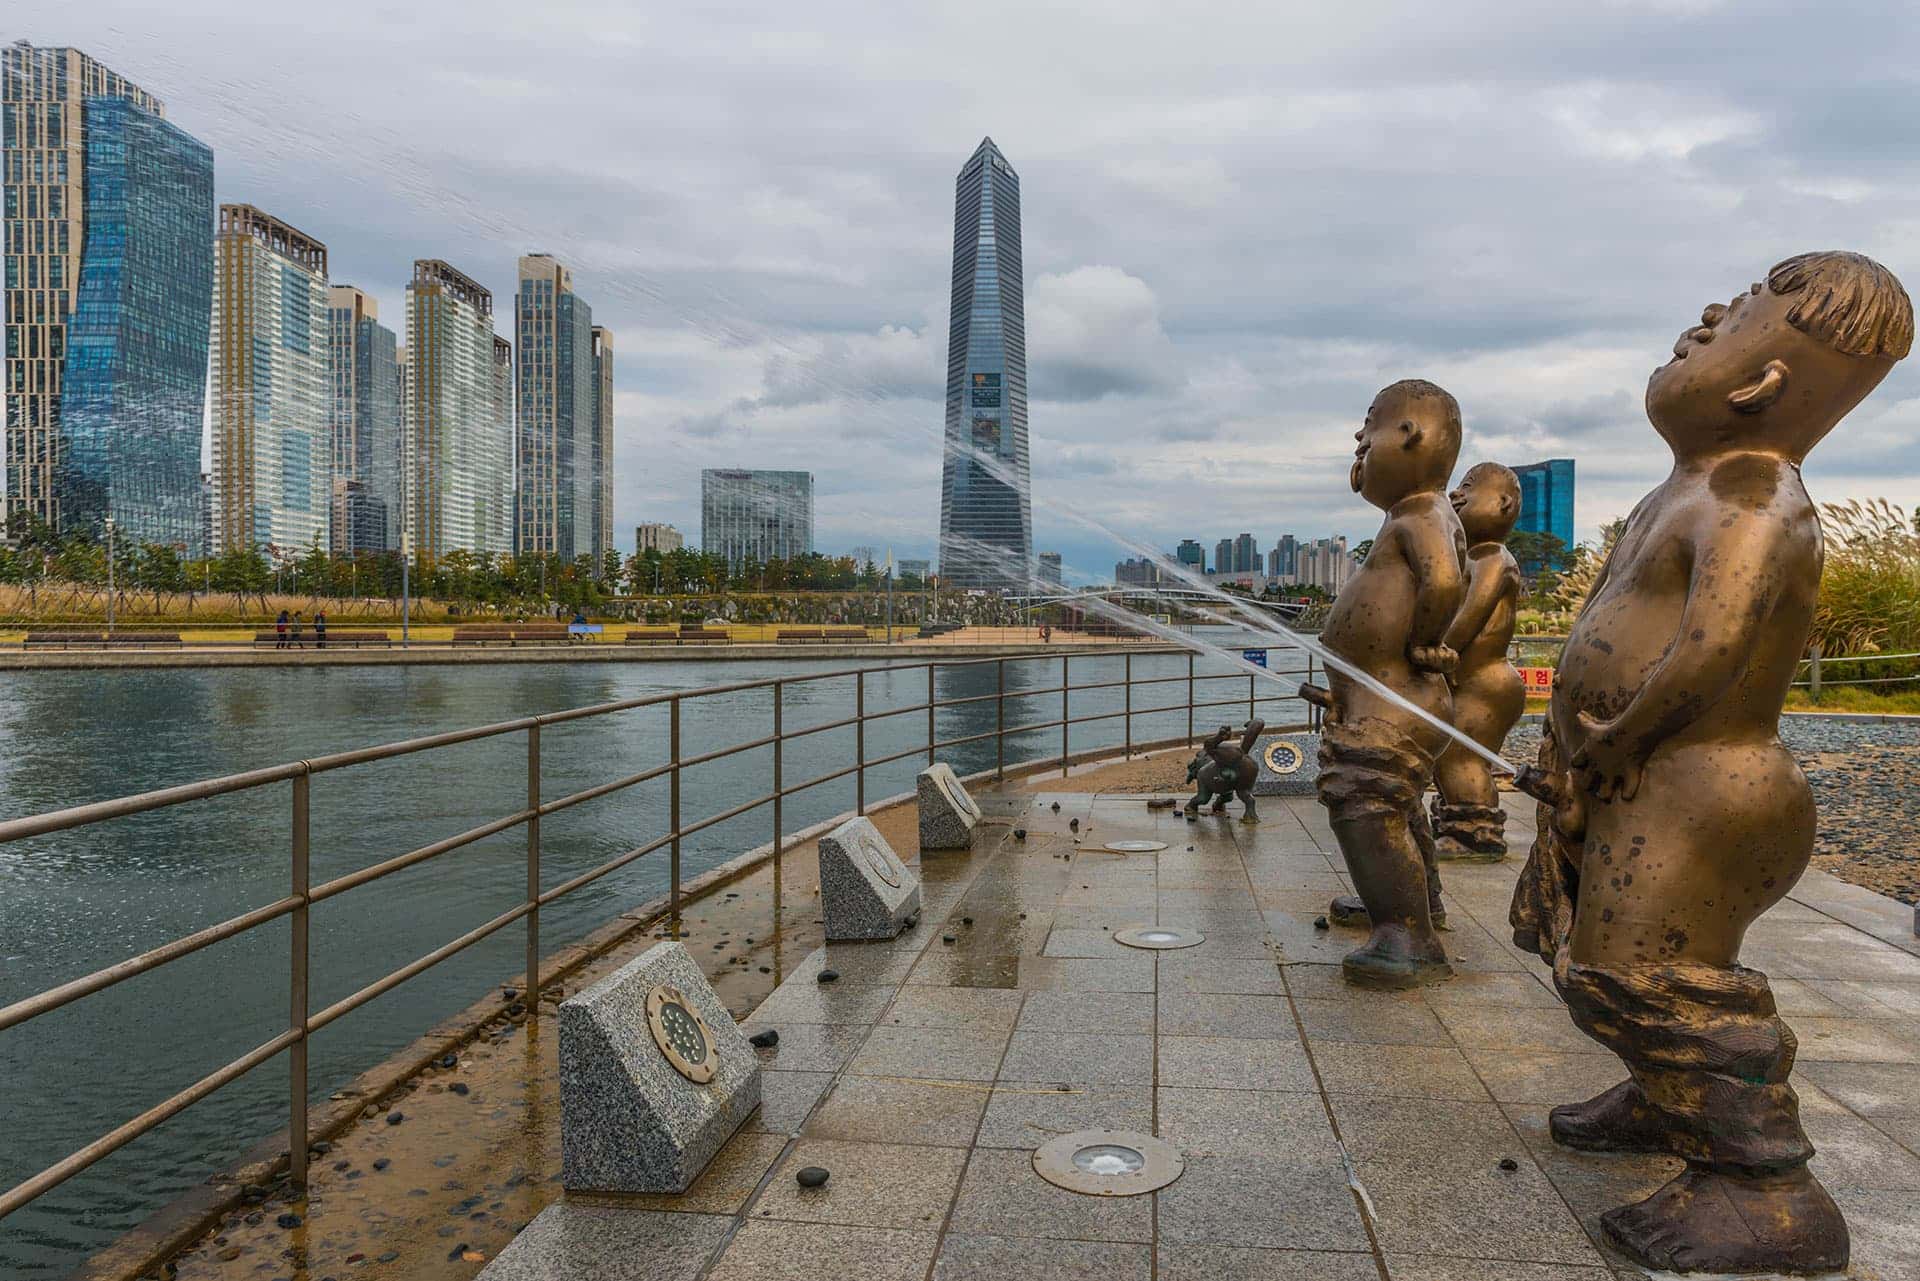 Songdo is South Korea's new “smart city” in Incheon - We Build Value